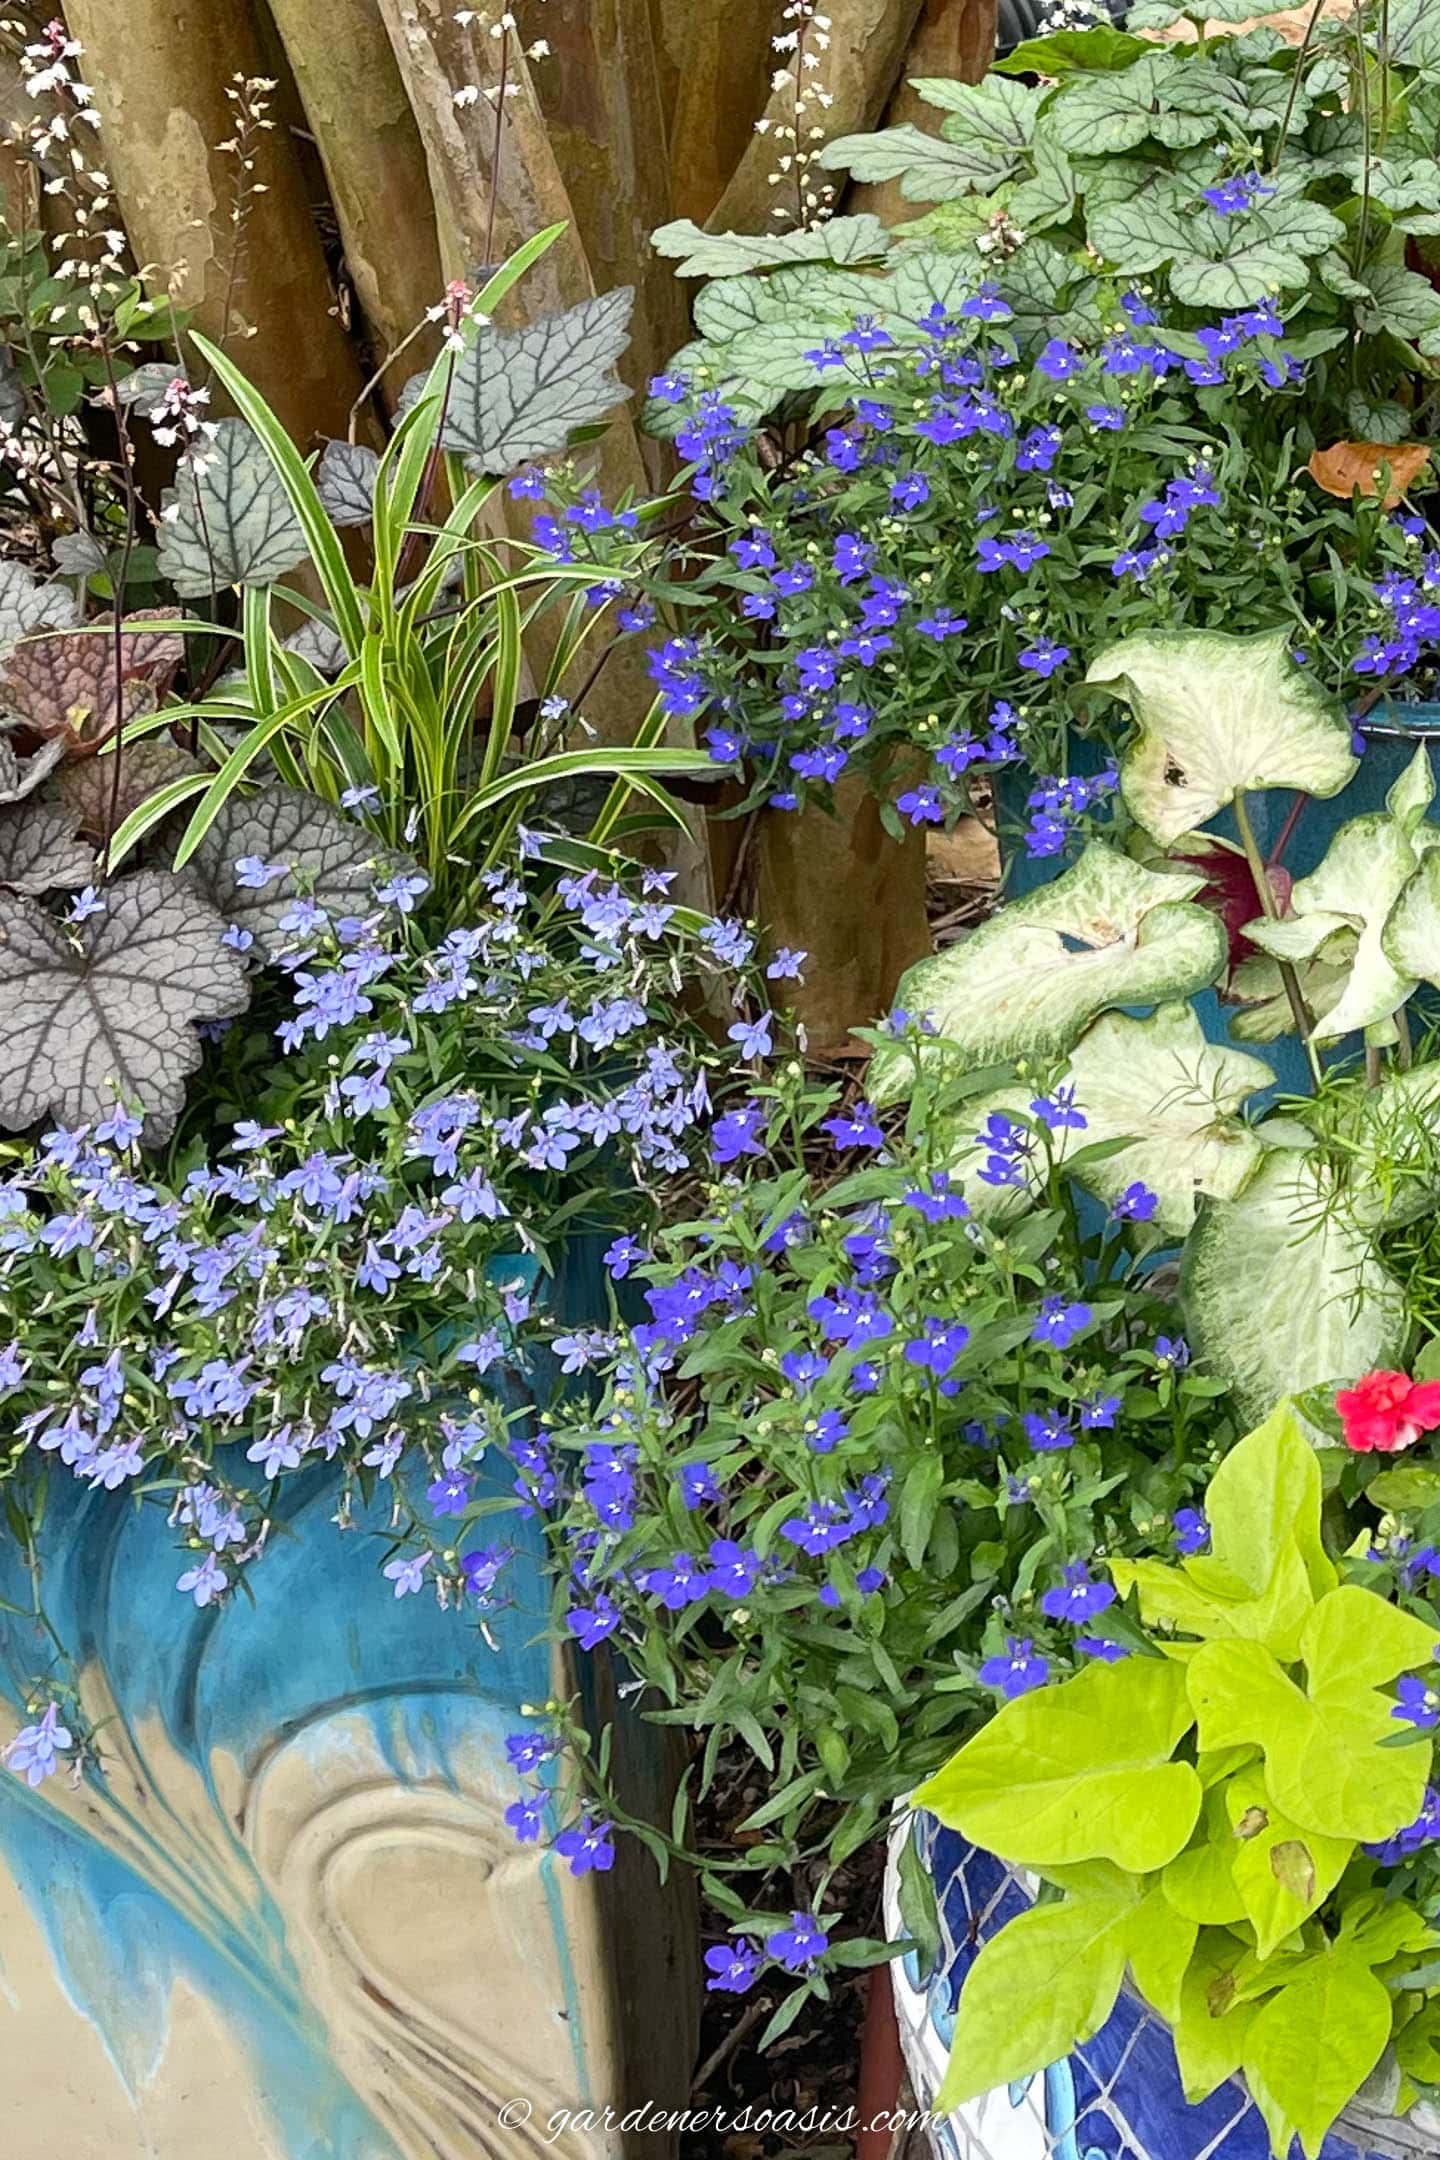 Blue trailing lobellia in pots with Heuchera, Calladiums and Sweet potato vine